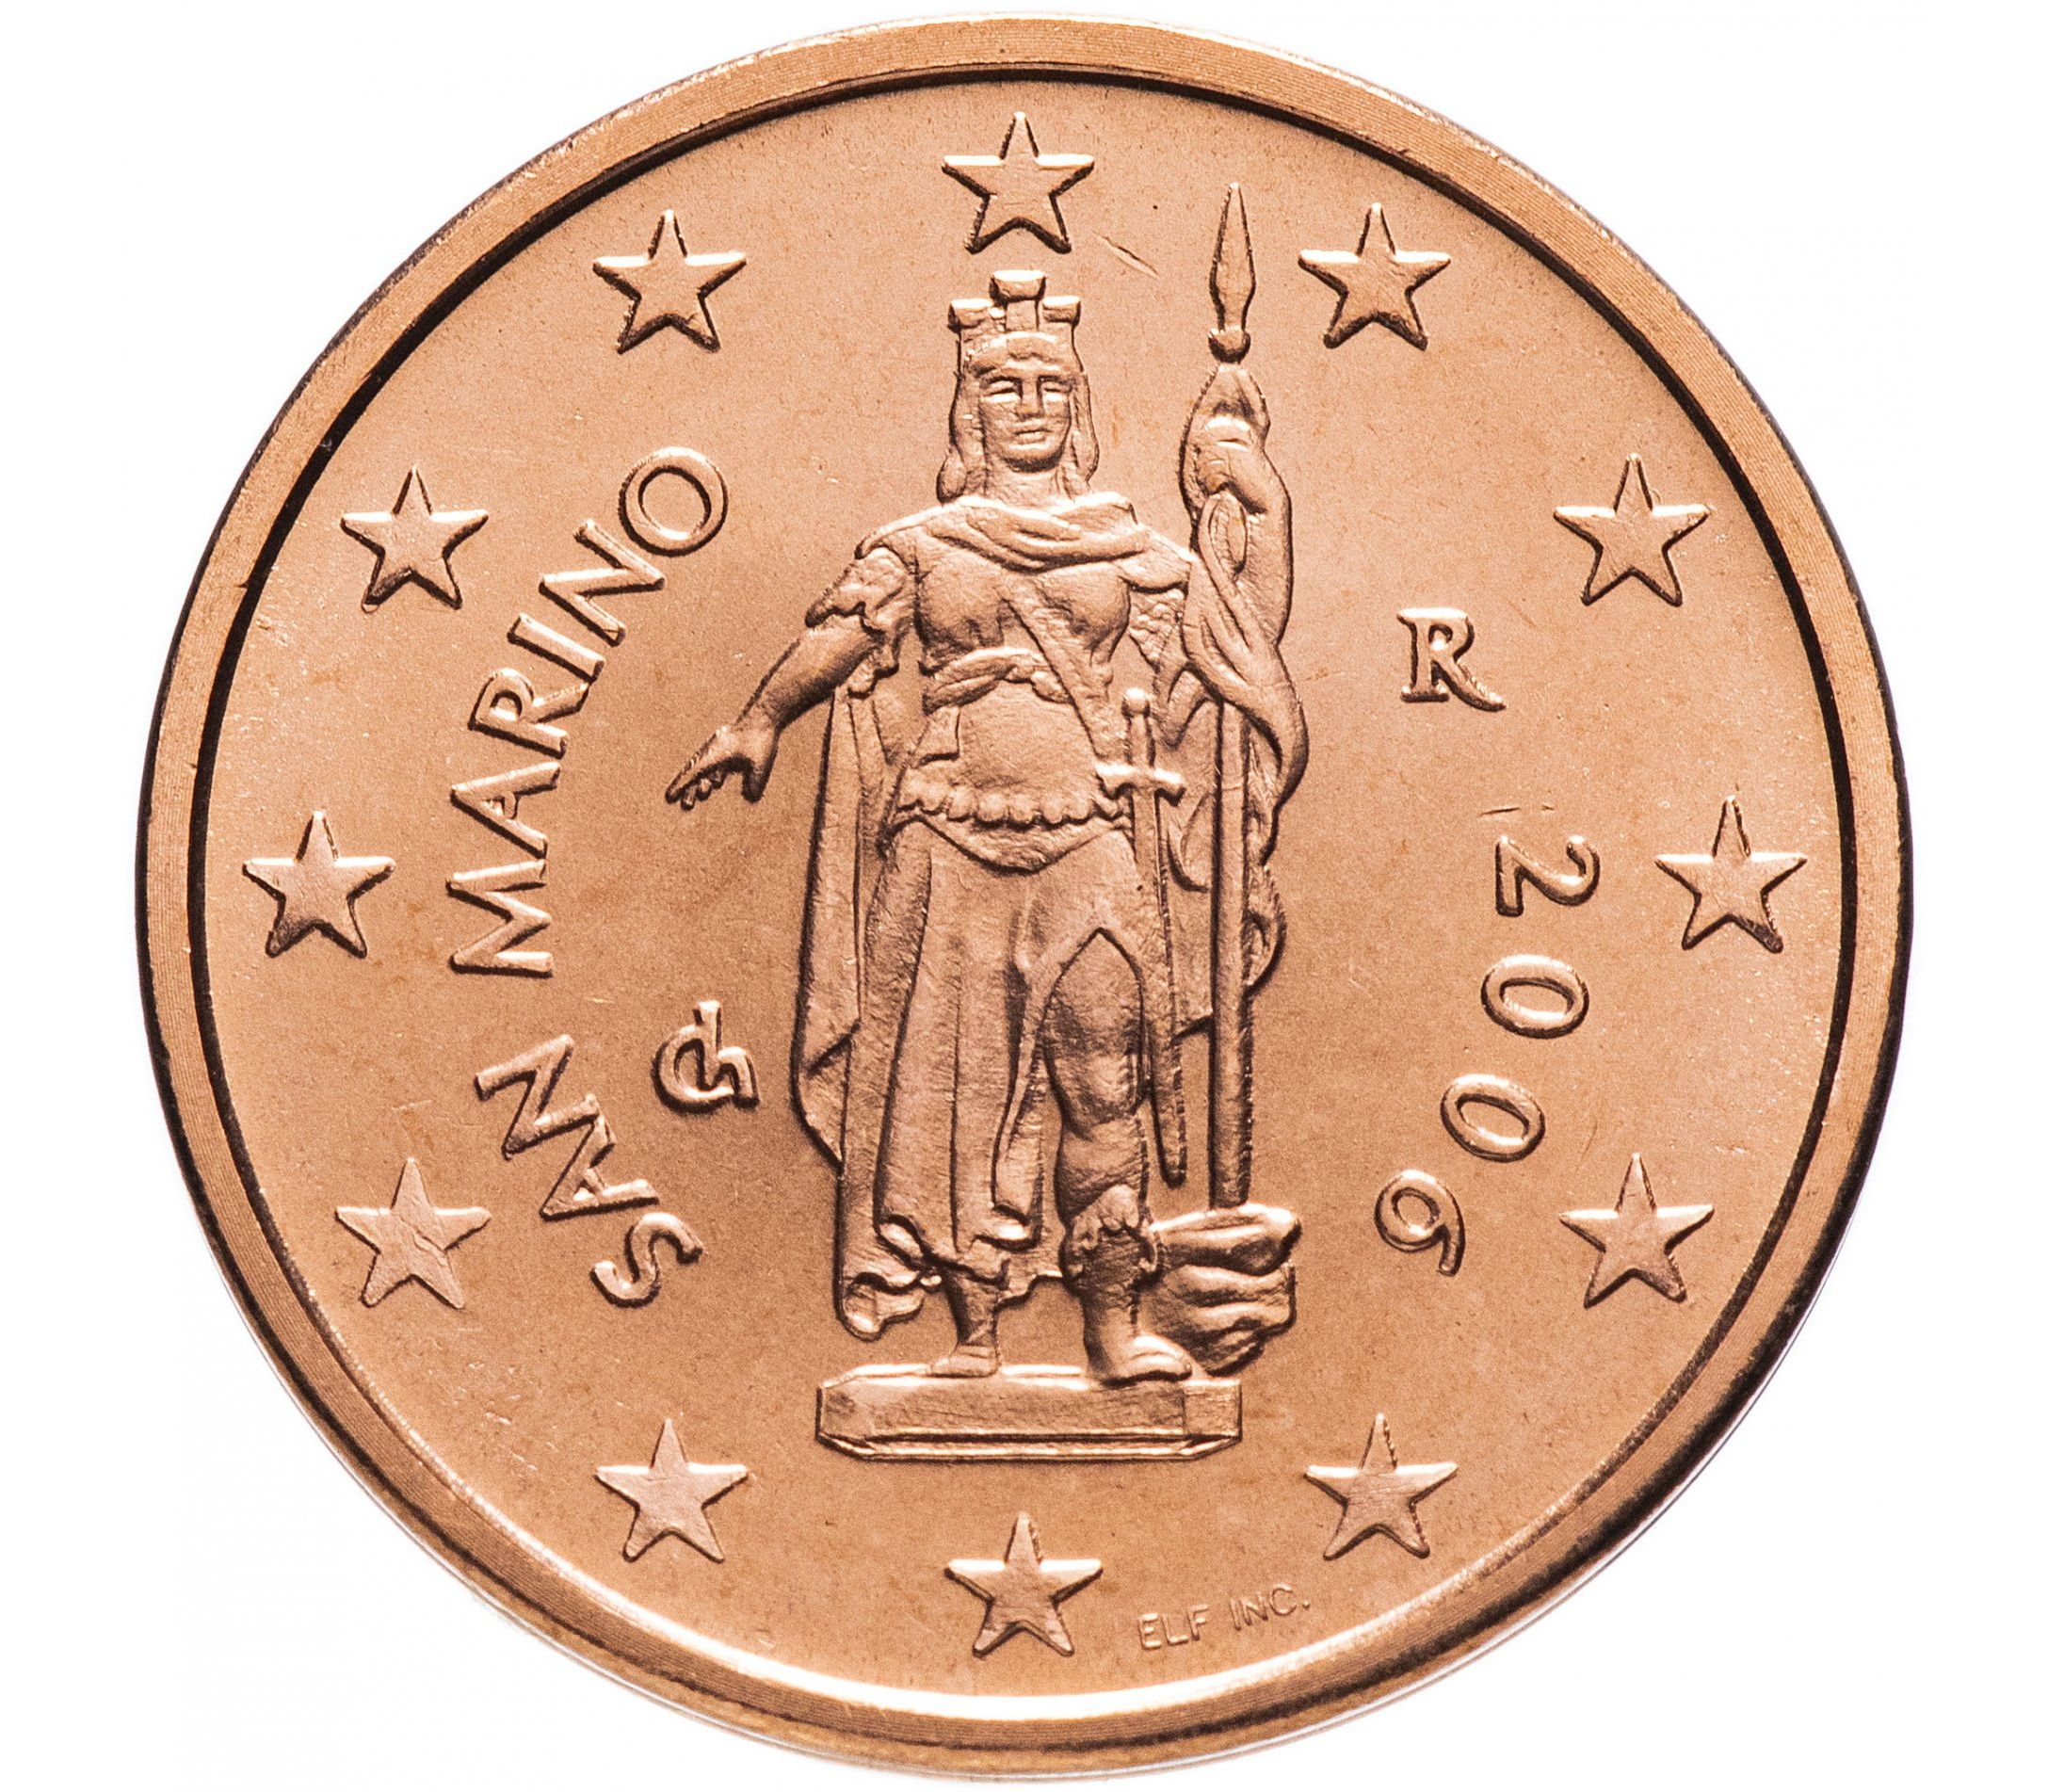 Сан марино 2. Евроценты Сан Марино. 2 Евро цент Сан Марино 2017. Монеты евро Сан-Марино. 2 Евро цент Сан Марино 2002.